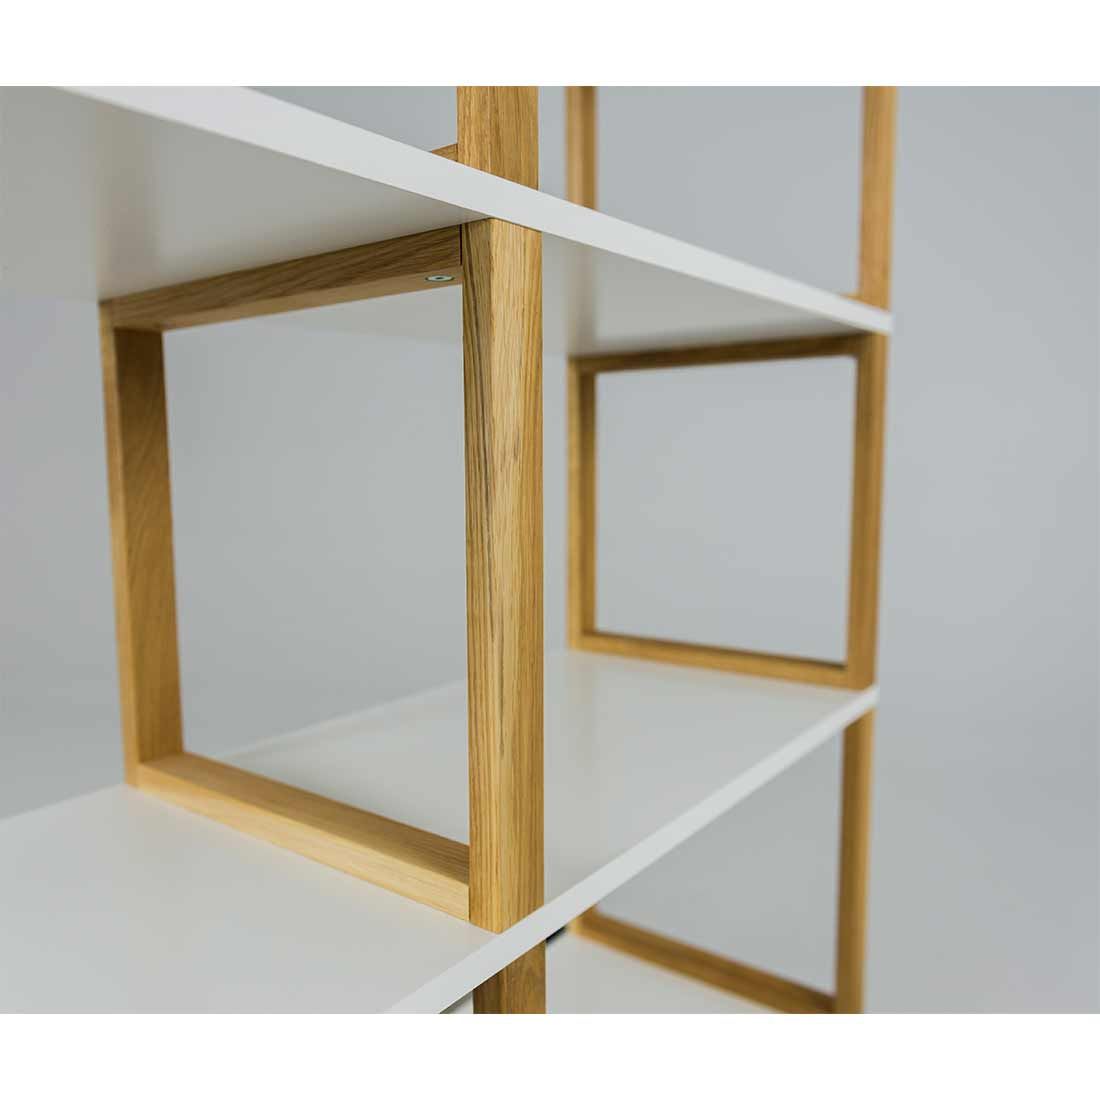 Tenzo Art Regal Raumteiler 120x36x156cm Weiß/Eiche | Regale